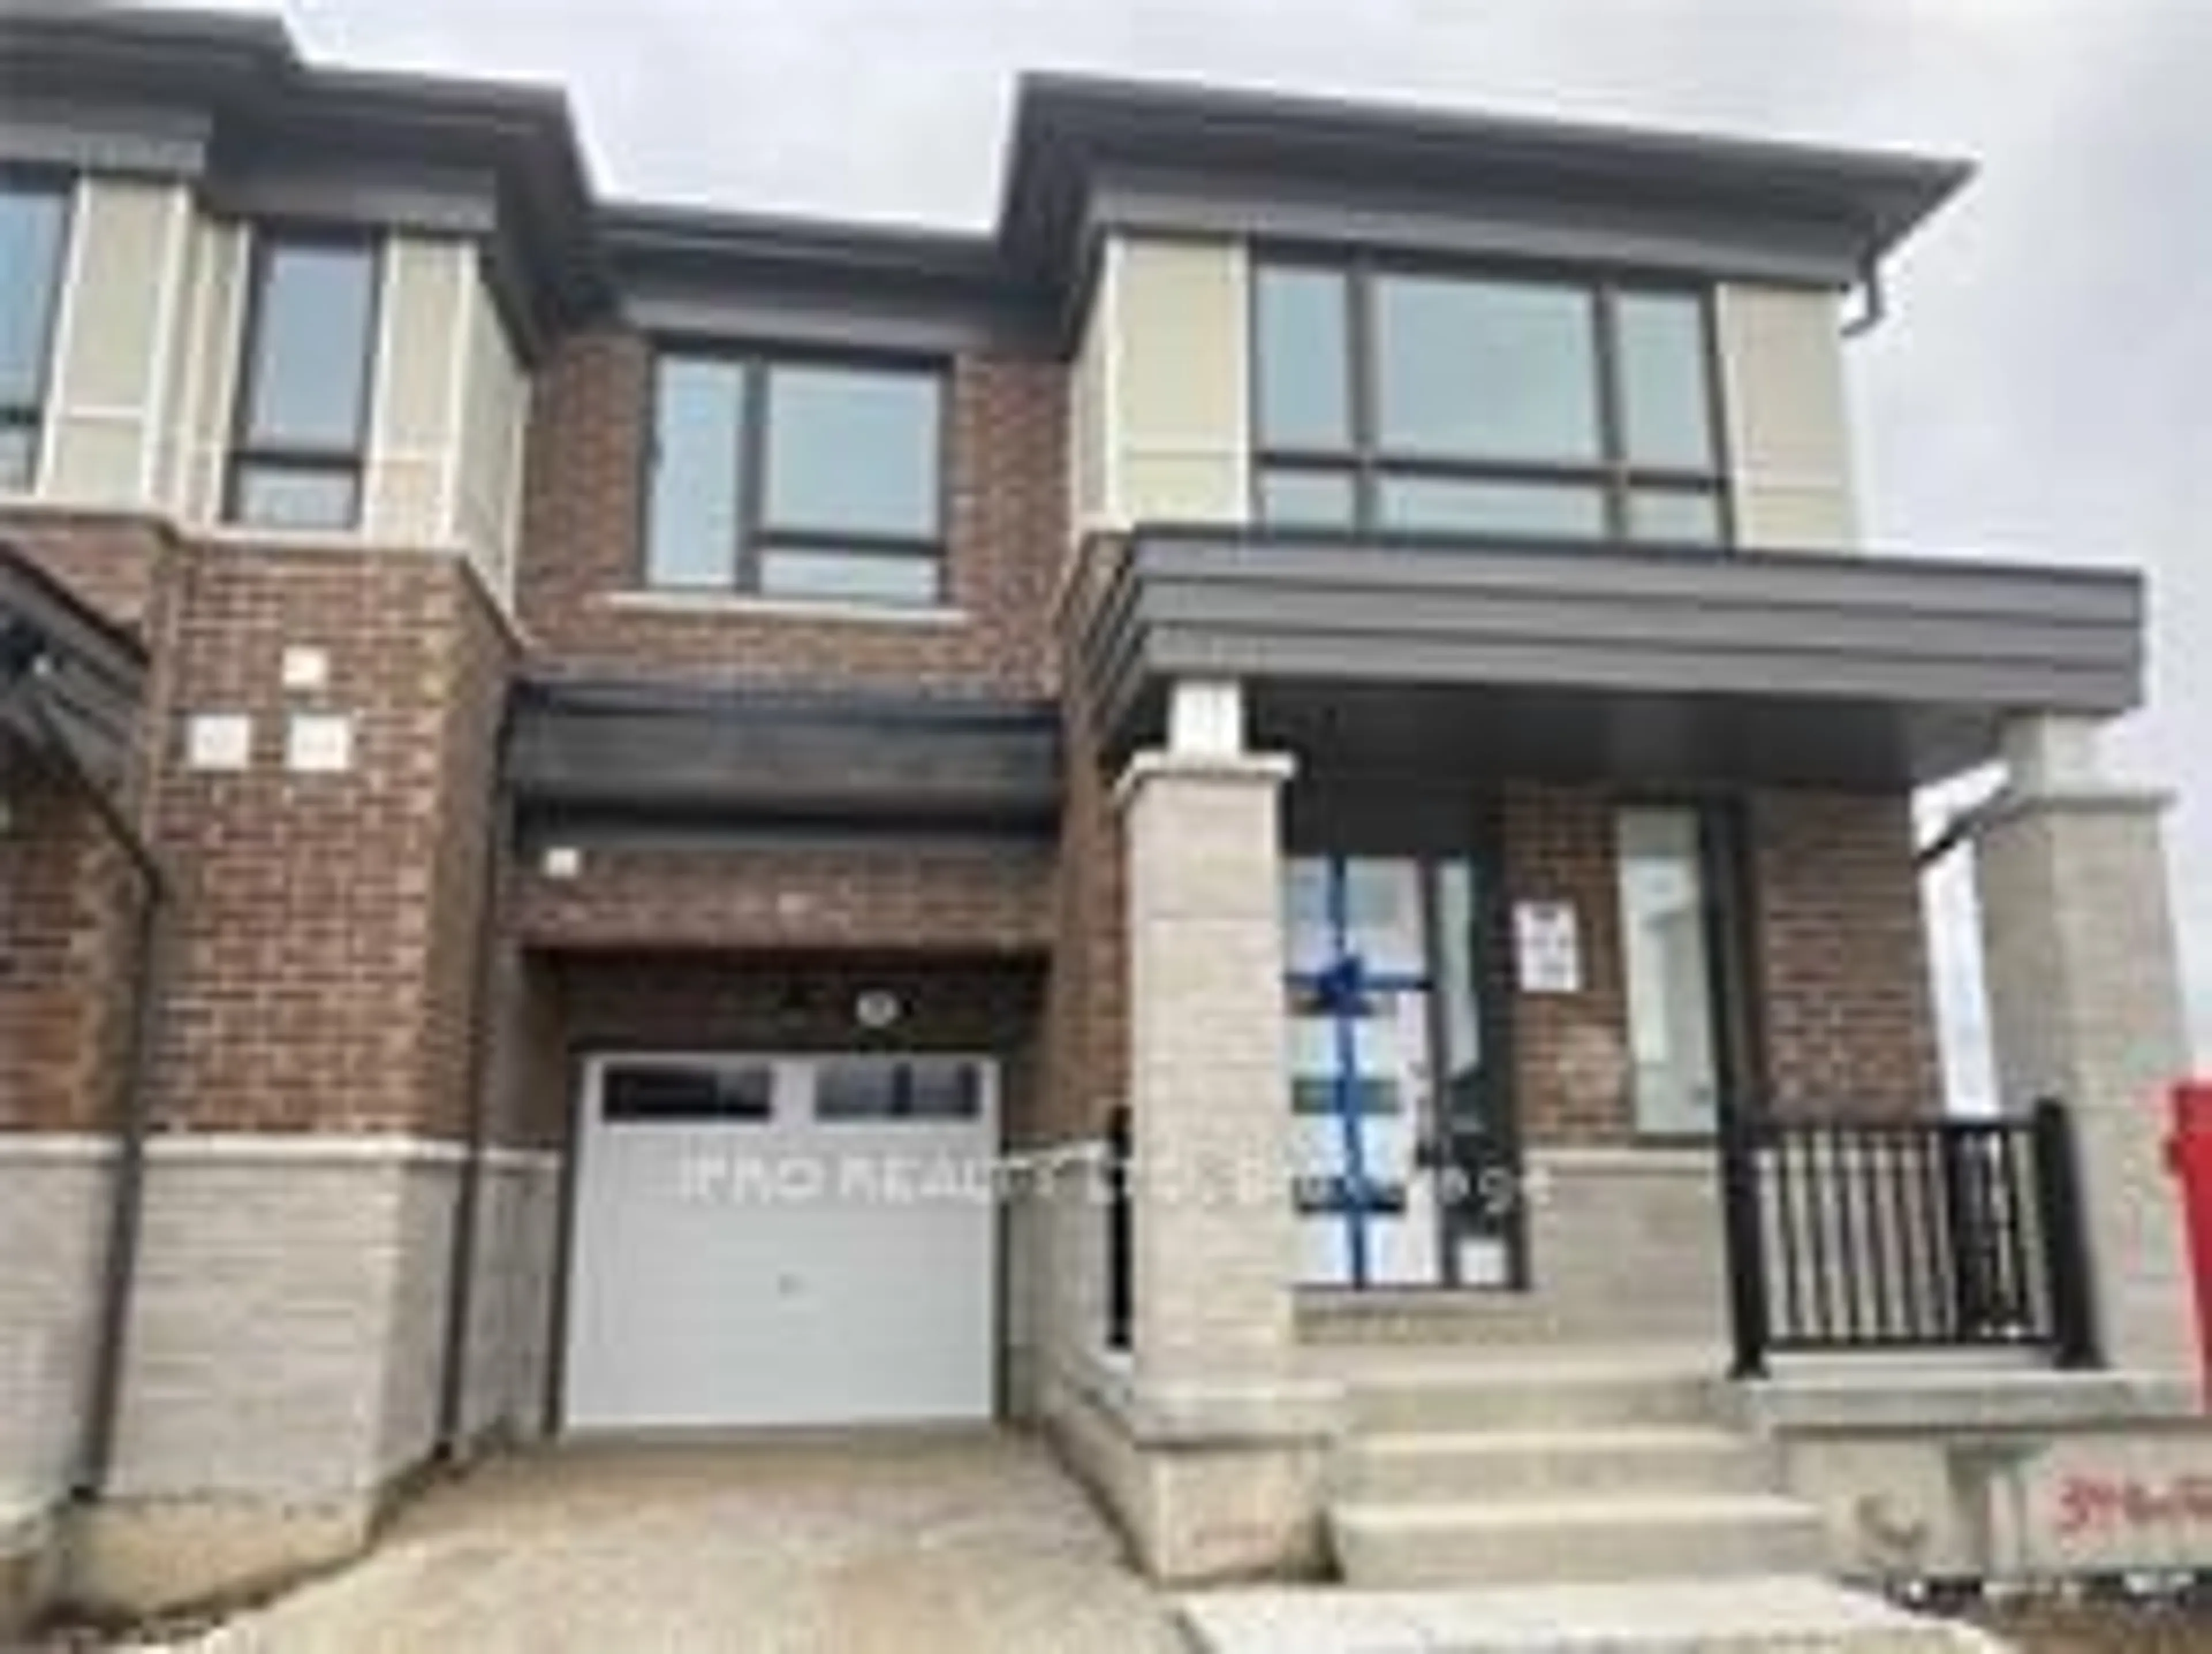 Home with brick exterior material for 46 Circus Cres, Brampton Ontario L7A 5E3